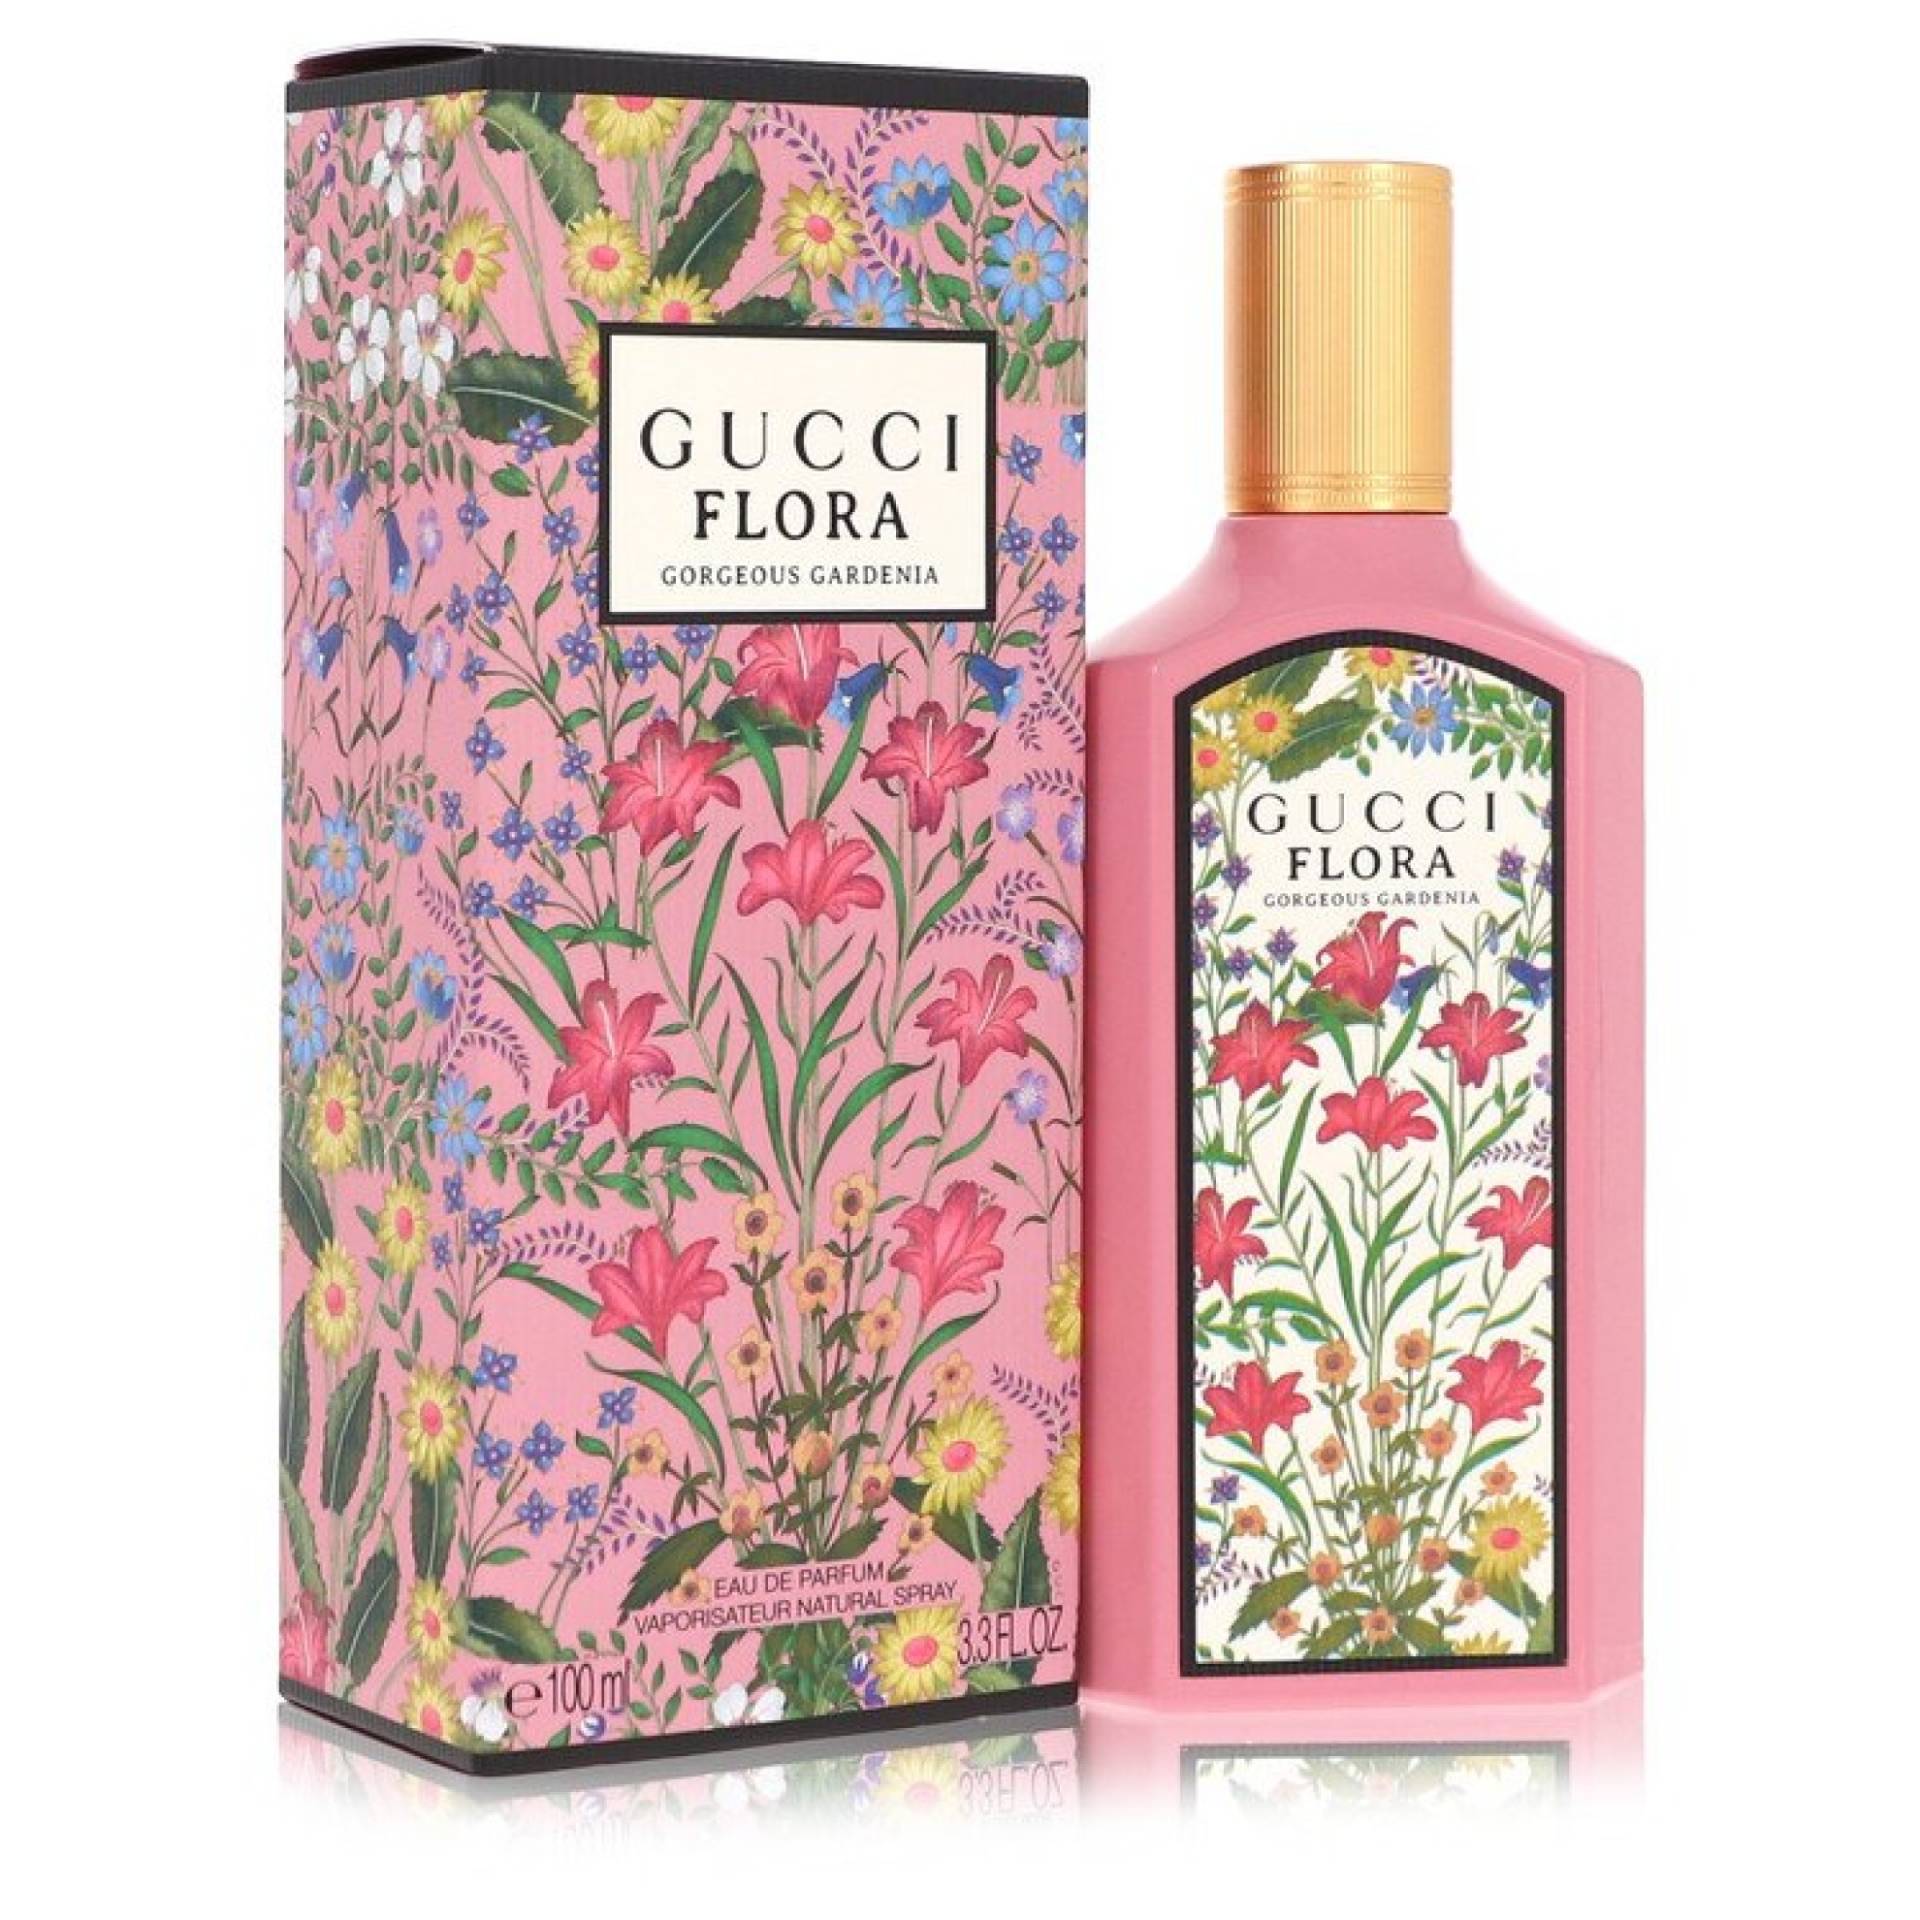 Gucci Flora Gorgeous Gardenia Eau De Parfum Spray 101 ml von Gucci